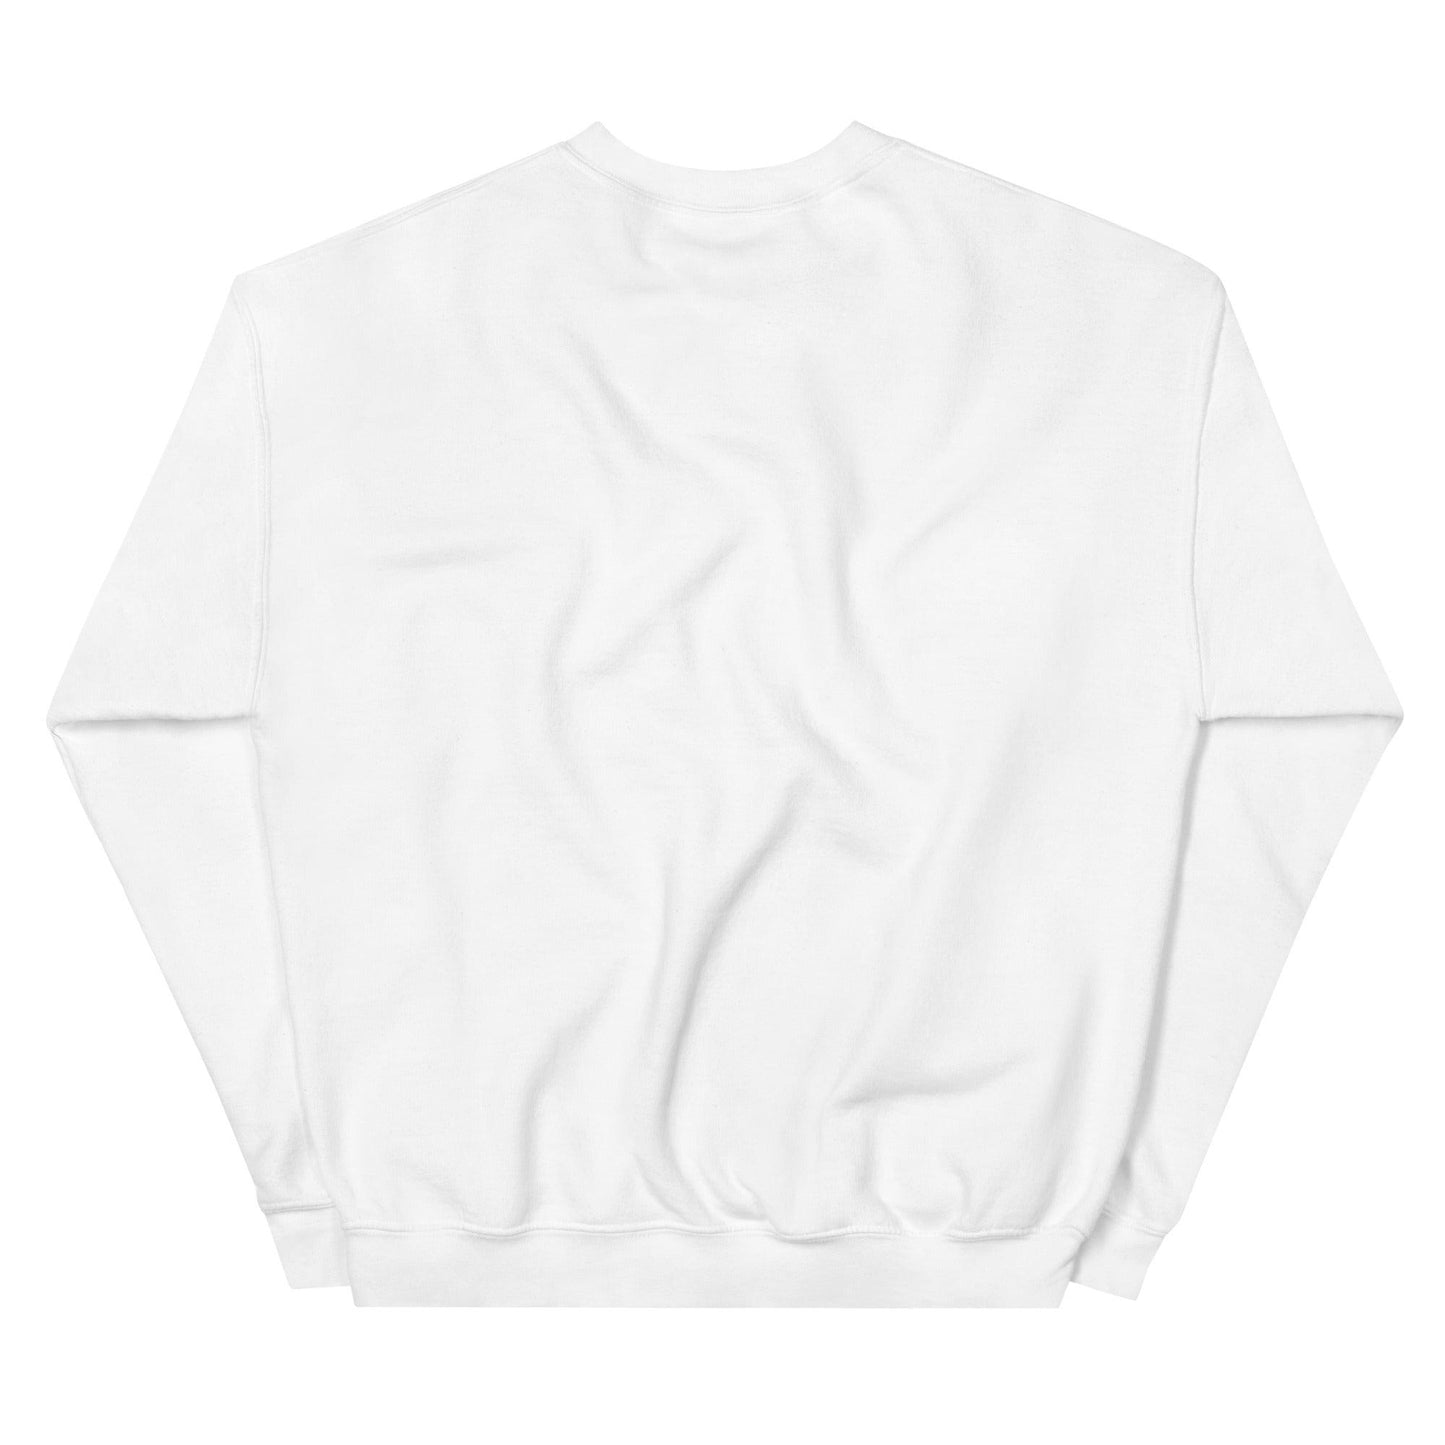 Black & White Bear Shadow Print Unisex Sweatshirt - Logan's Toy Chest